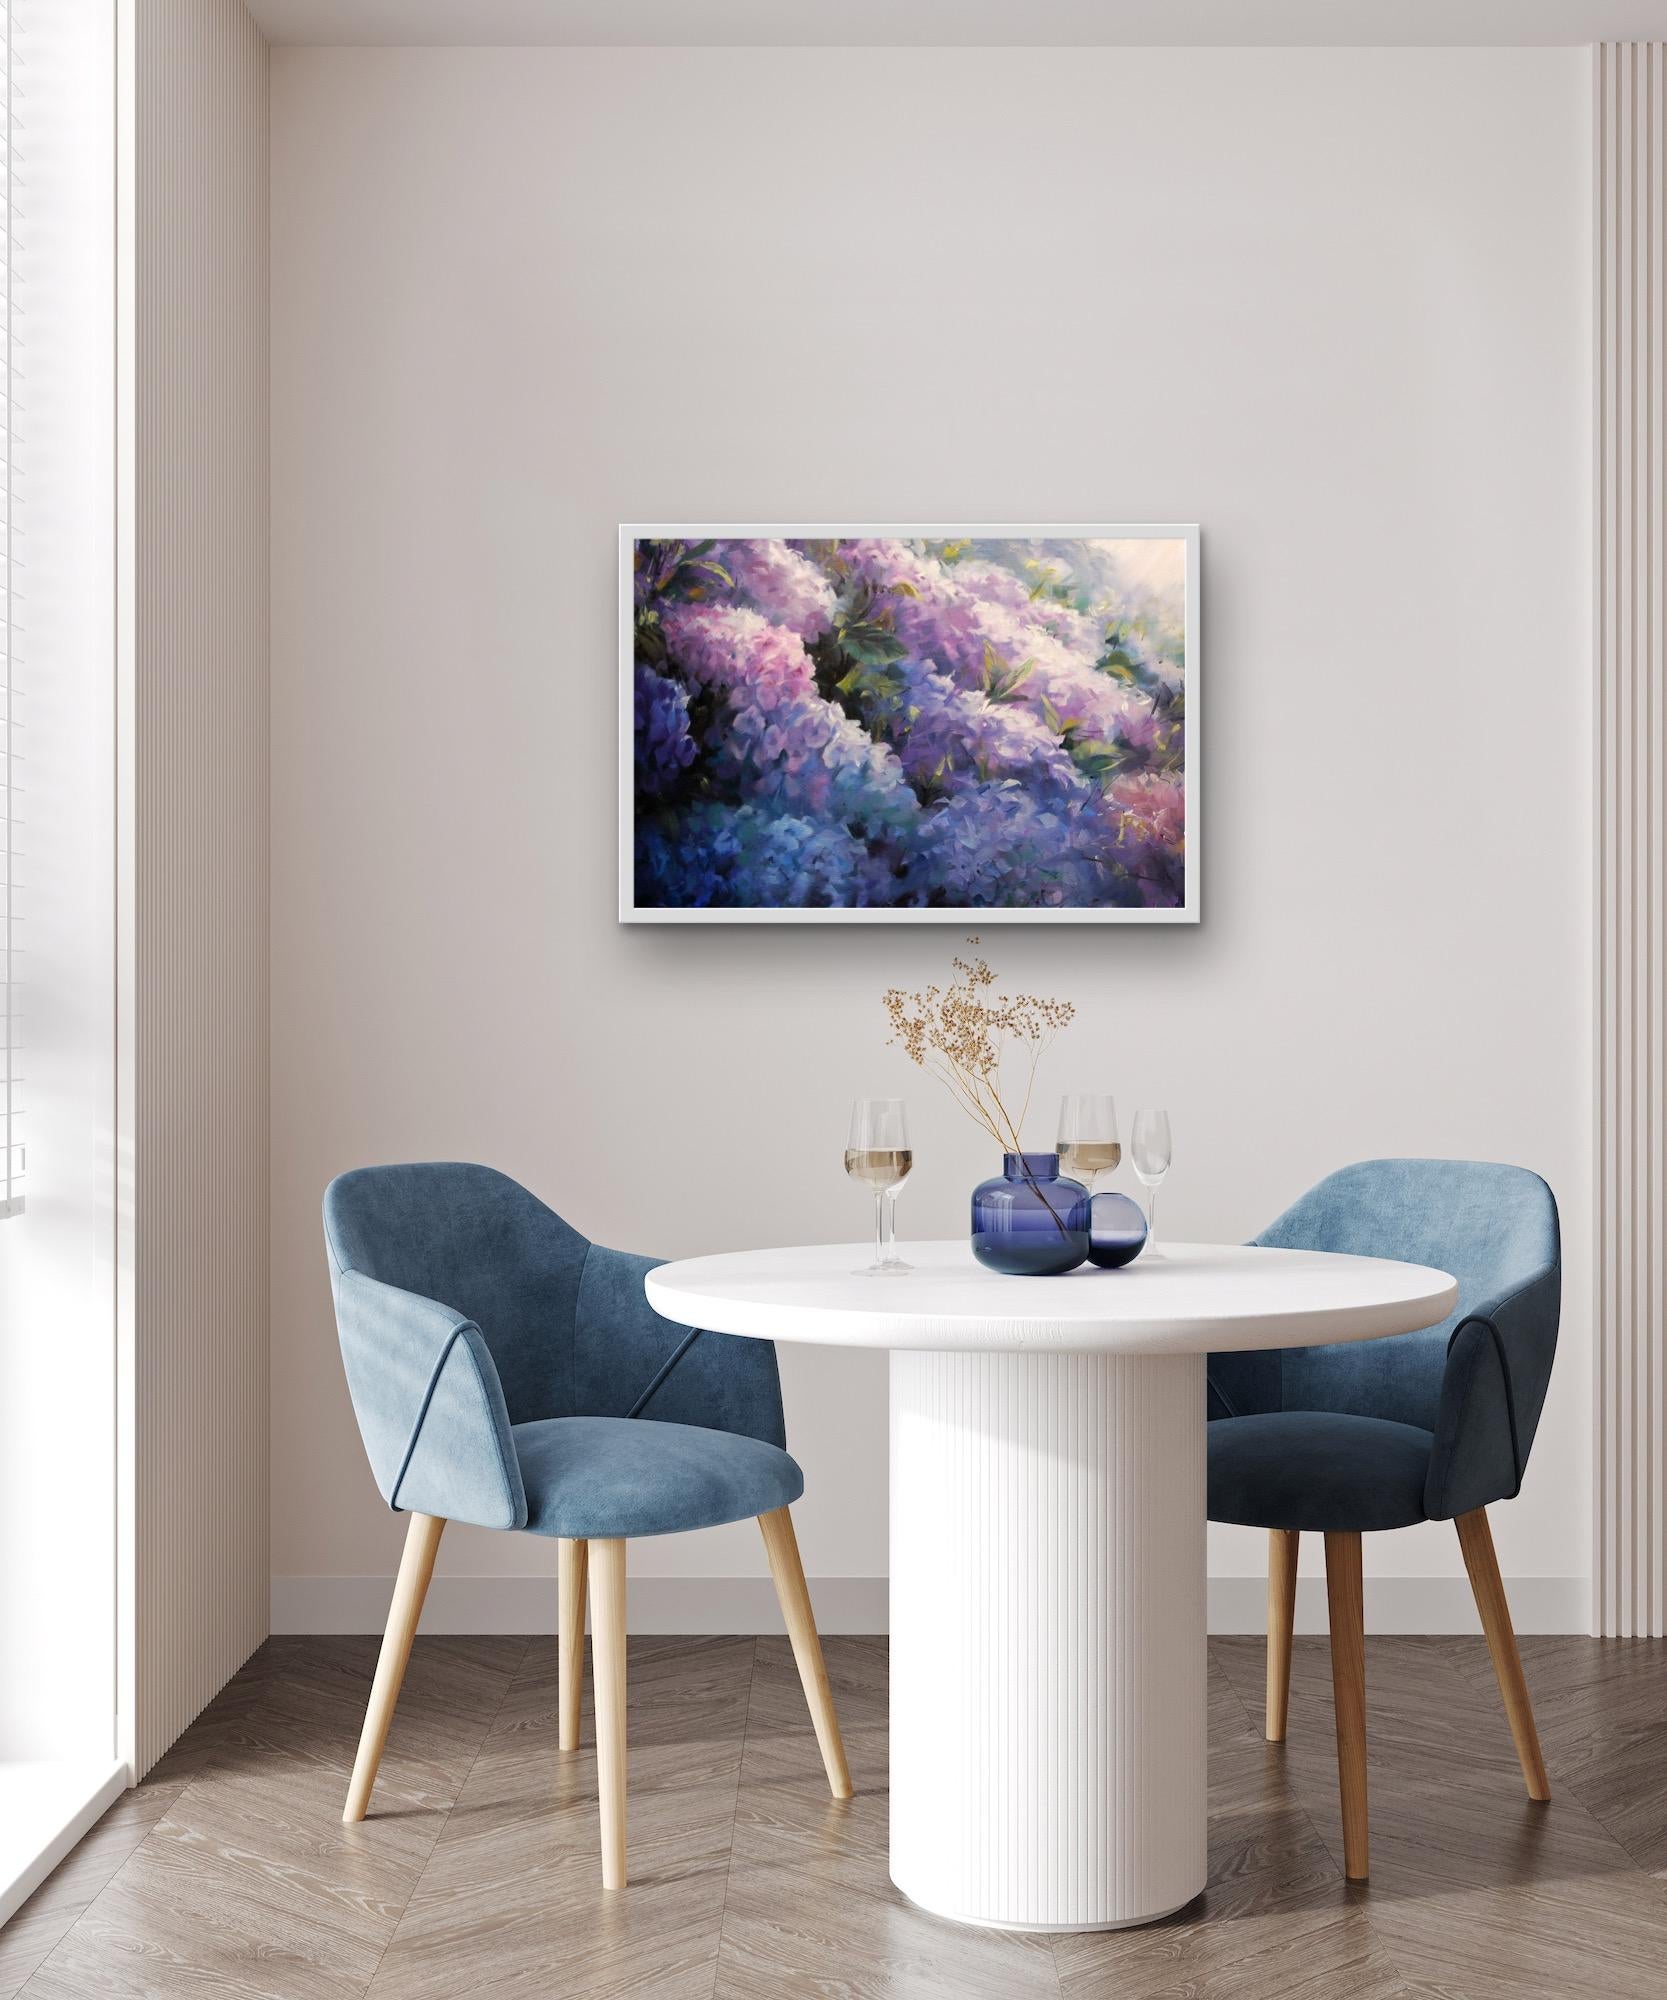 Hydrangeas in Sunlight, floral art, original art, affordable art - Painting by Trevor Waugh